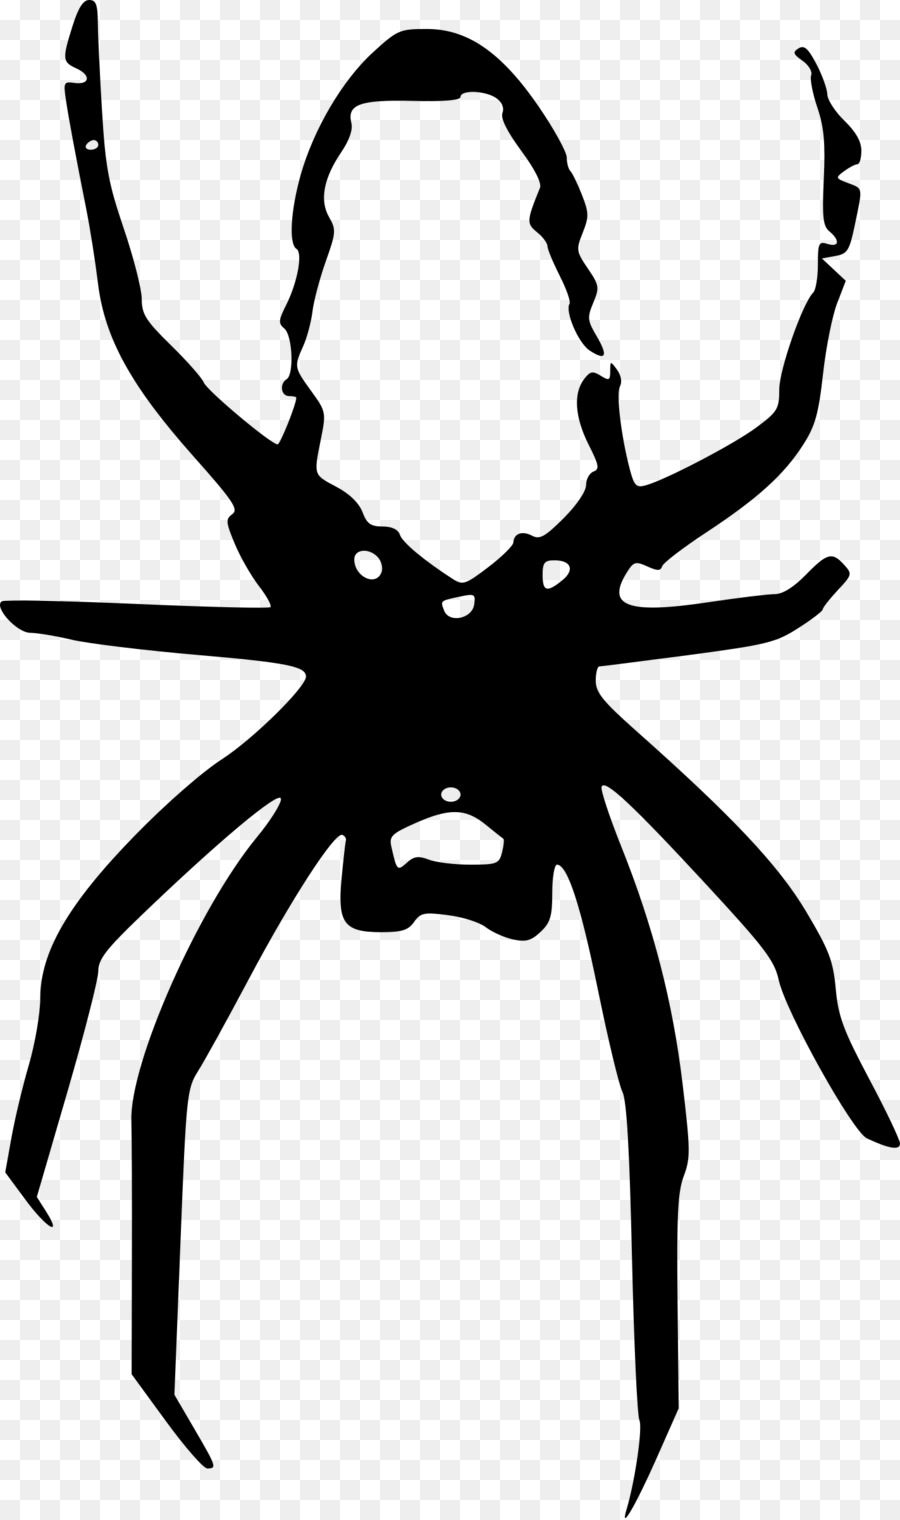 Spider web Clip art - spider png download - 1423*2400 - Free Transparent Spider png Download.